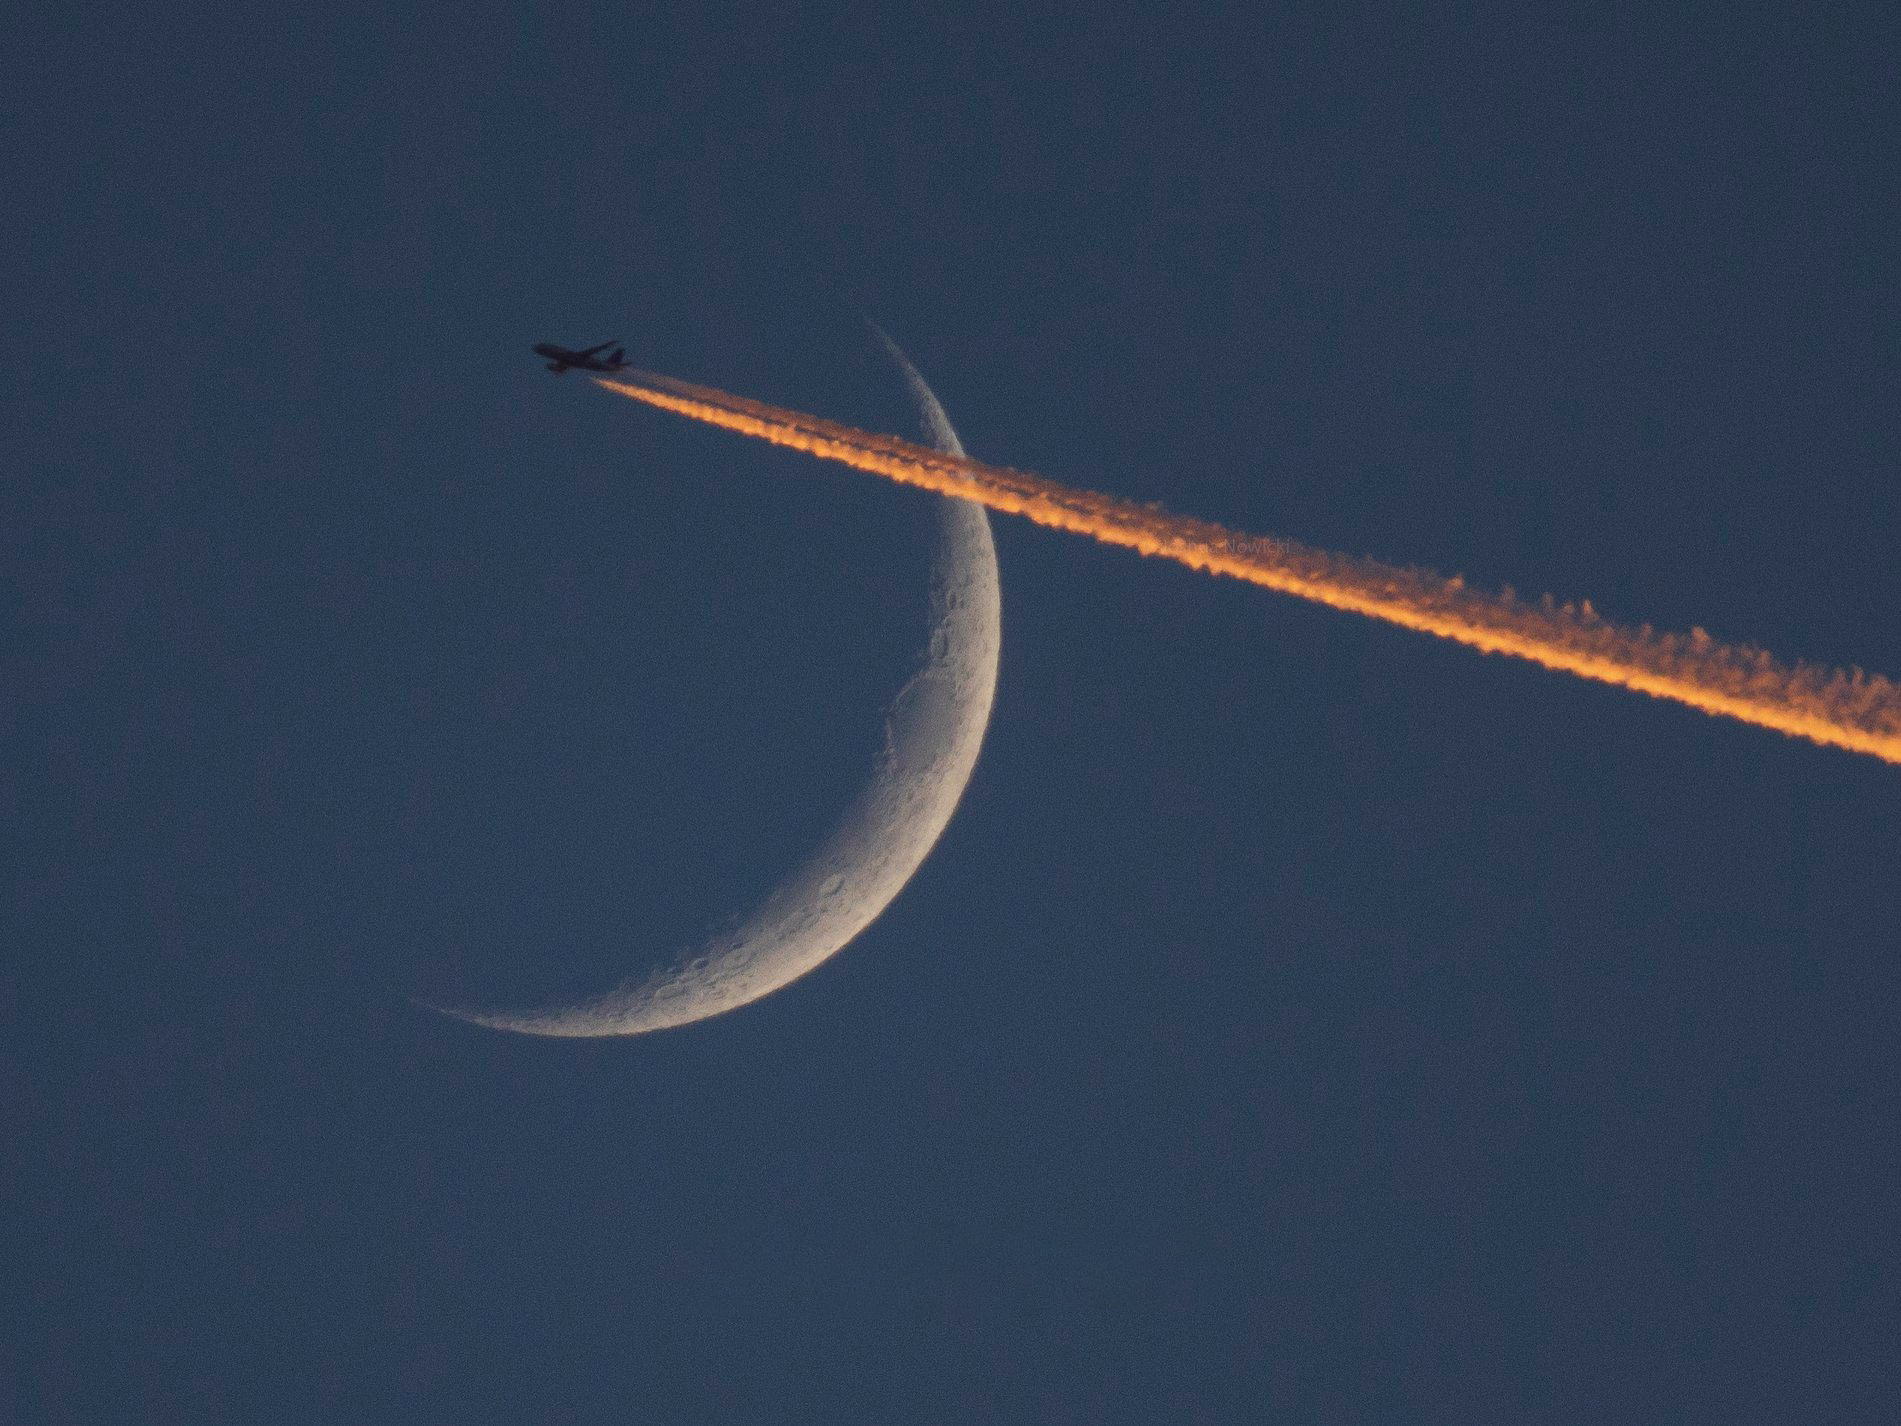 Moon & Airplane photo by Joshua Nowicki